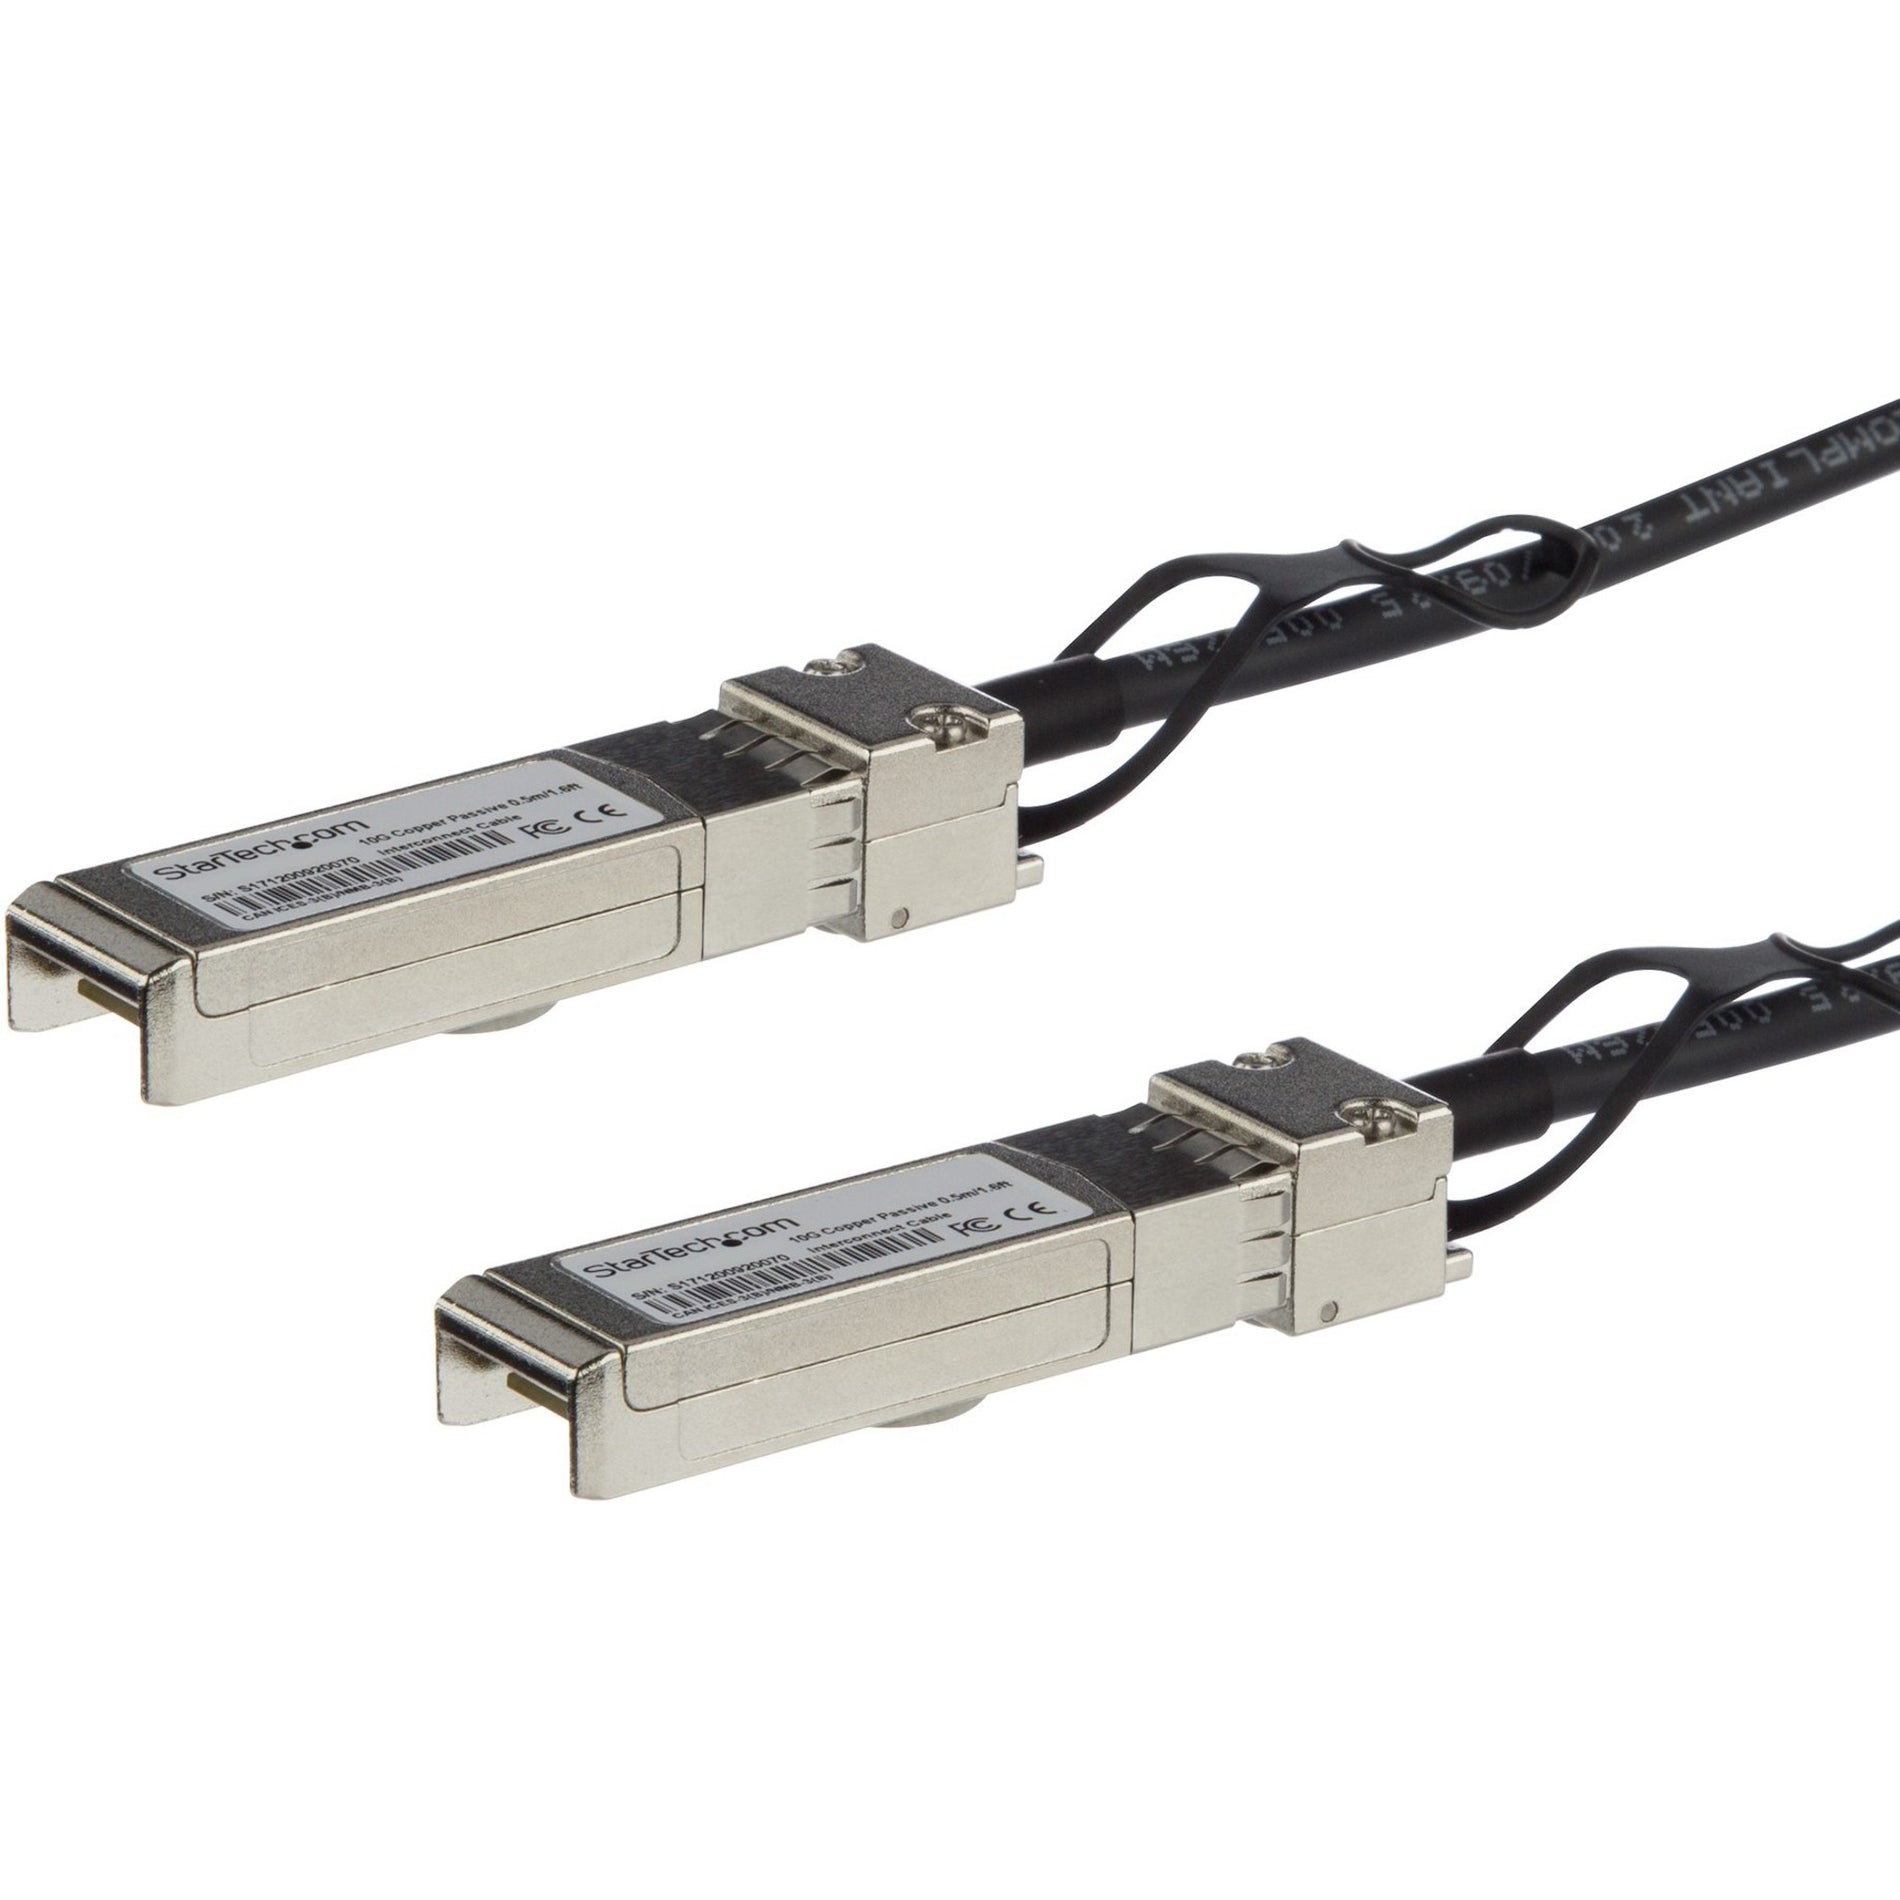 StarTech.com SFP10GPC3M SFP+ Direct Attach Cable - MSA Compliant - 3 m (9.8 ft.), Hot-swappable, Passive, 10 Gbit/s